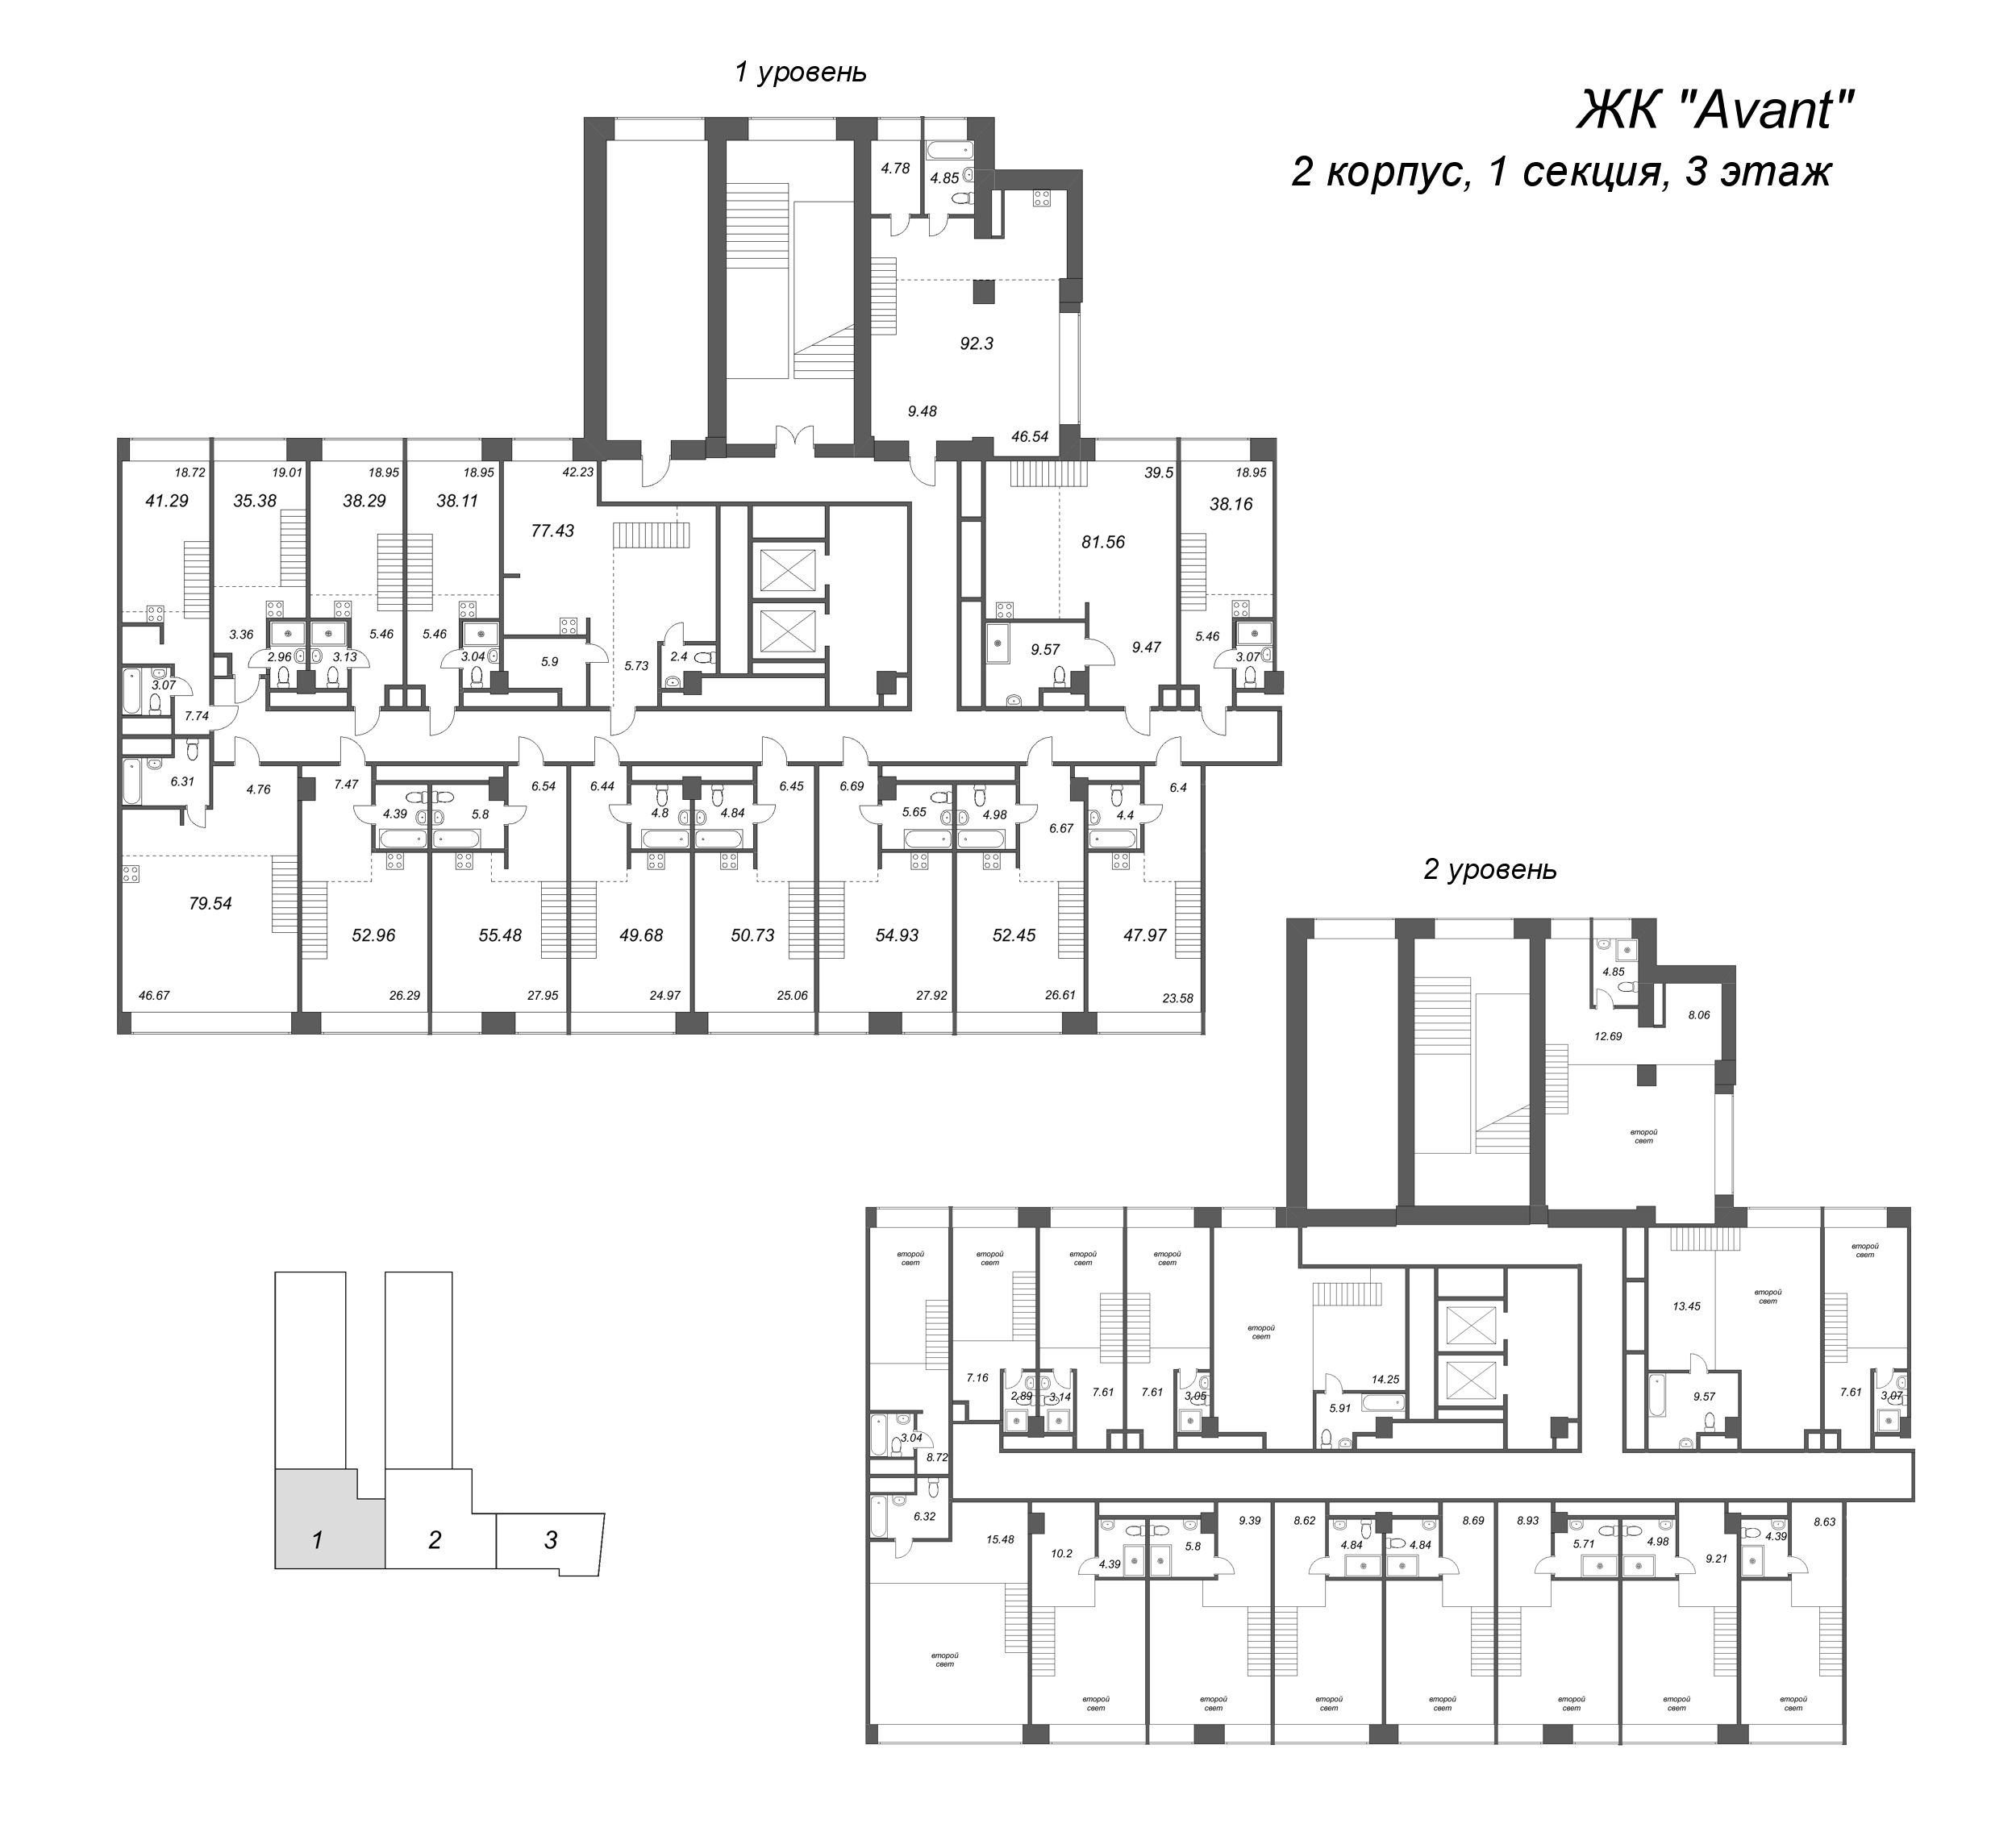 2-комнатная (Евро) квартира, 38.11 м² в ЖК "Avant" - планировка этажа